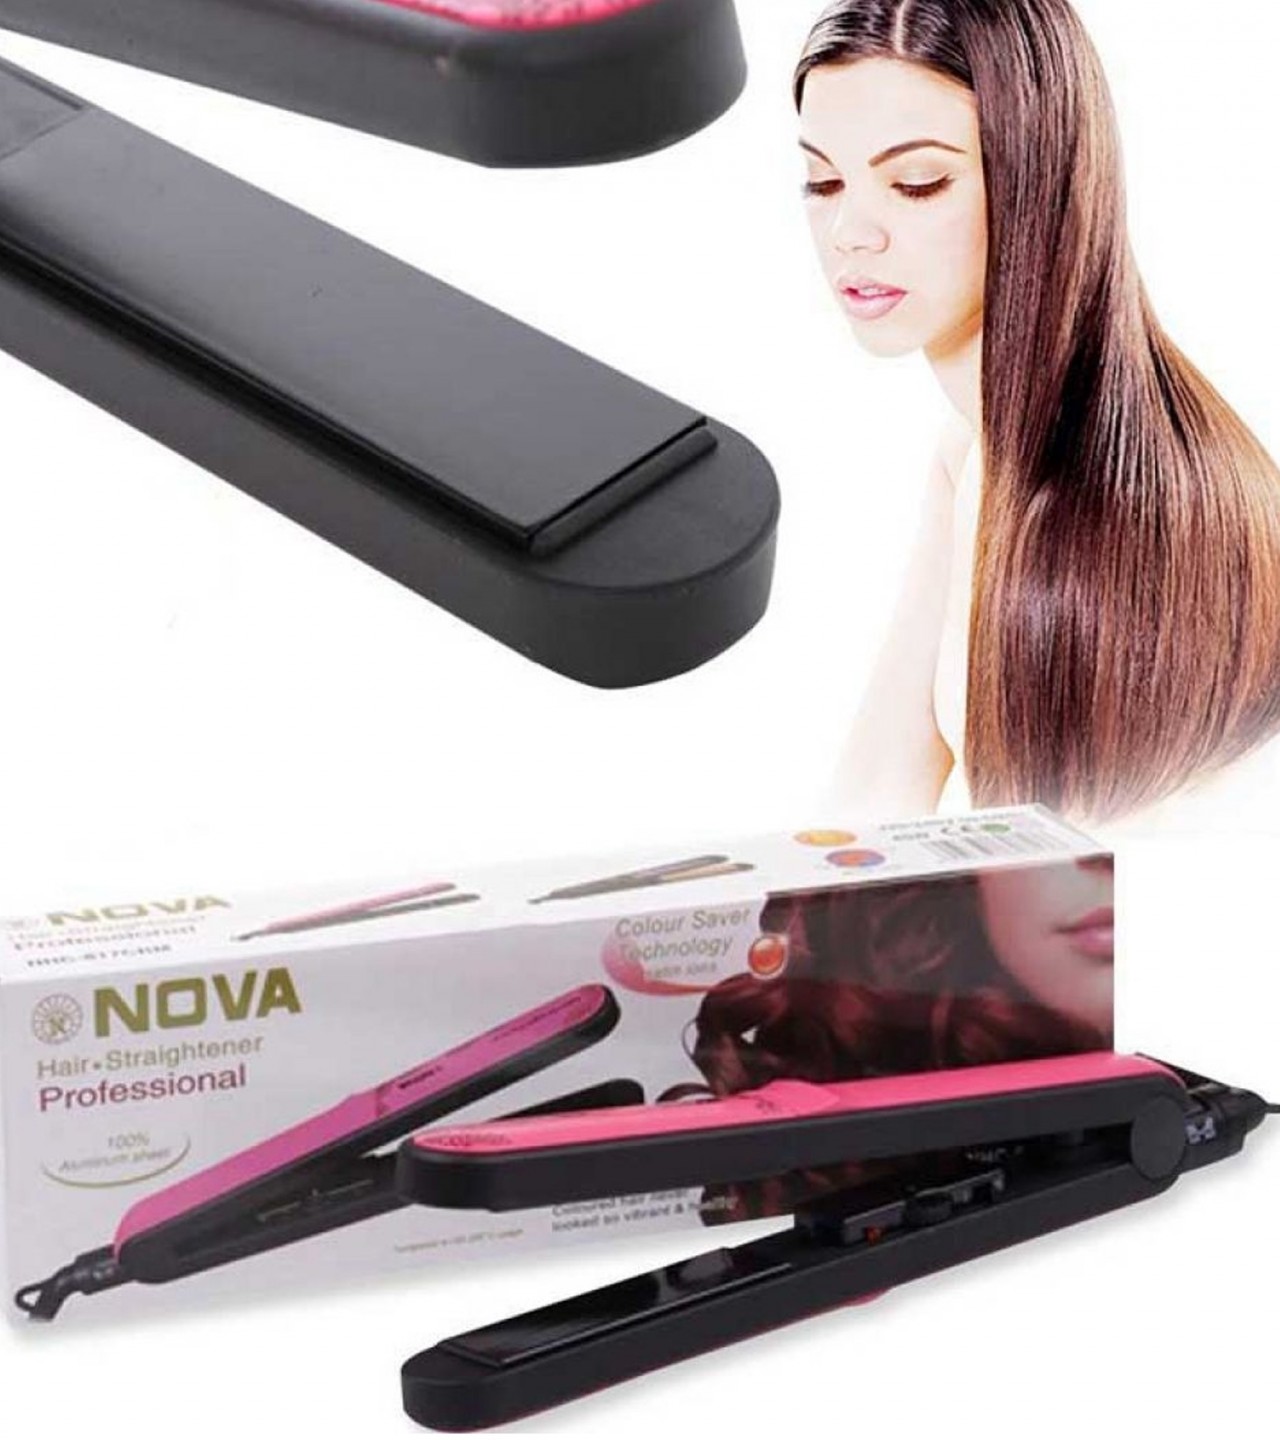 Nova-817 Original Hair Straightener - 1 year warranty